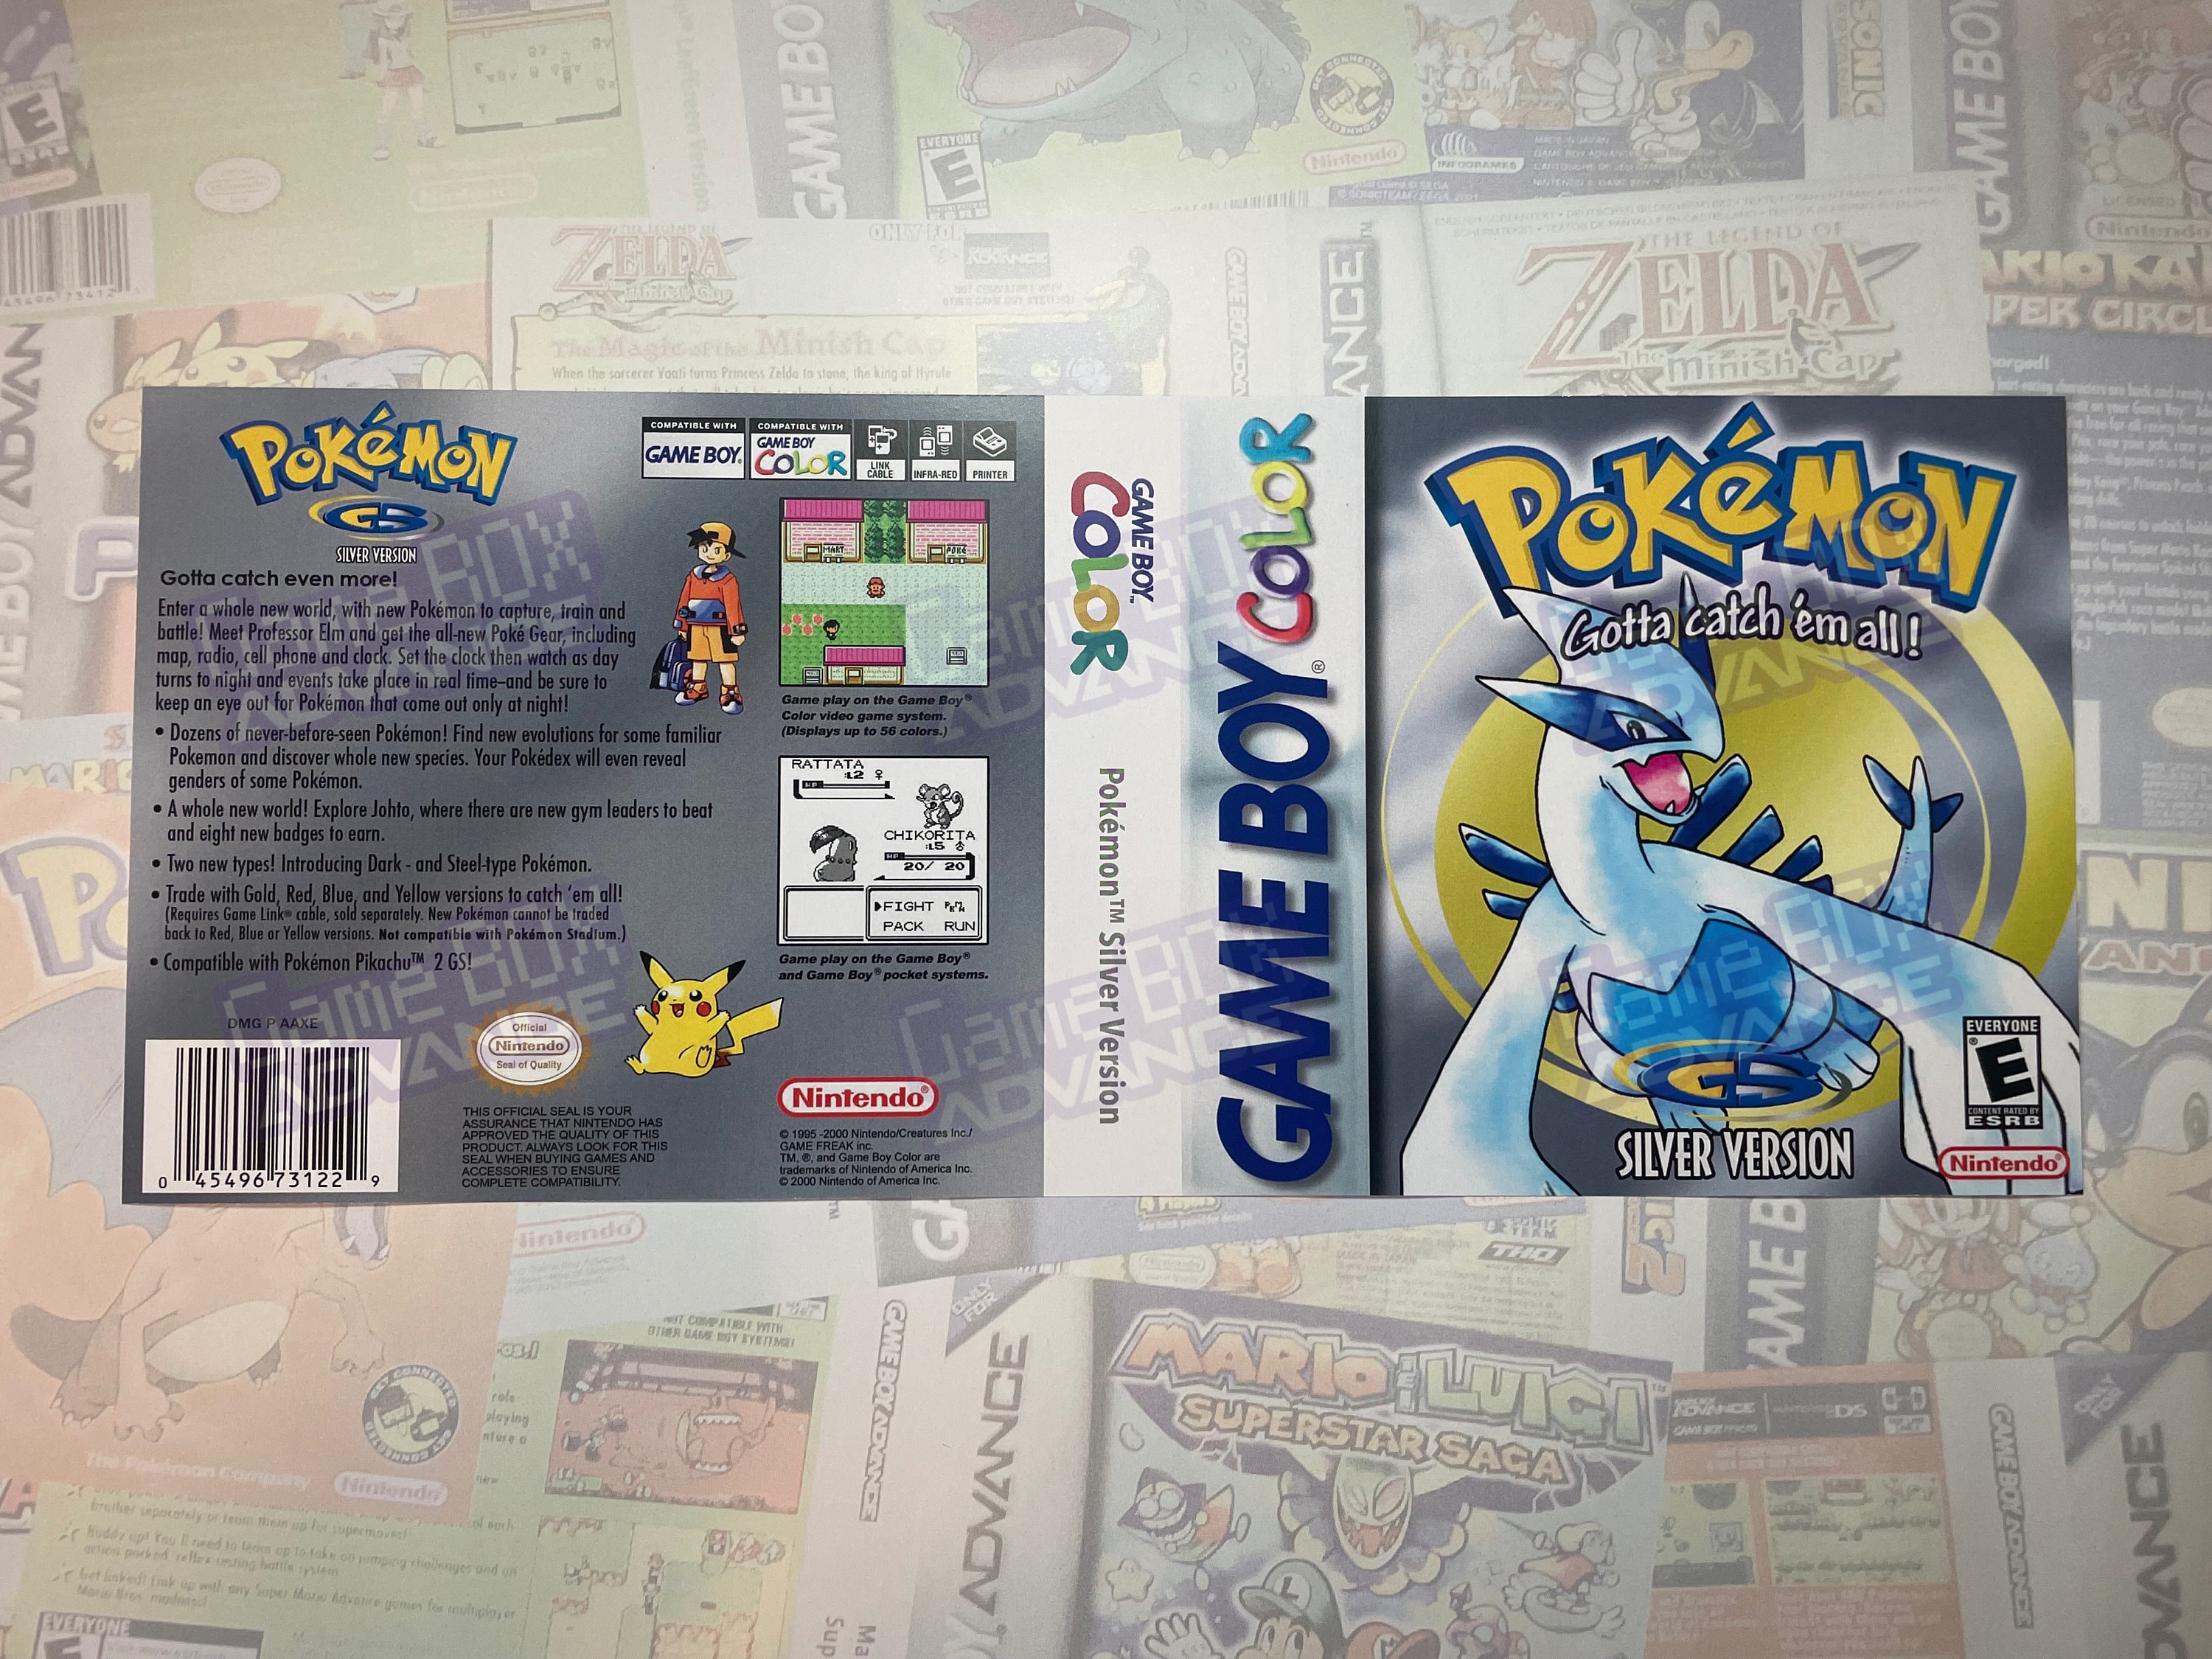 Pokemon Shiny Gold Nintendo DS Box Art Cover by bpc908